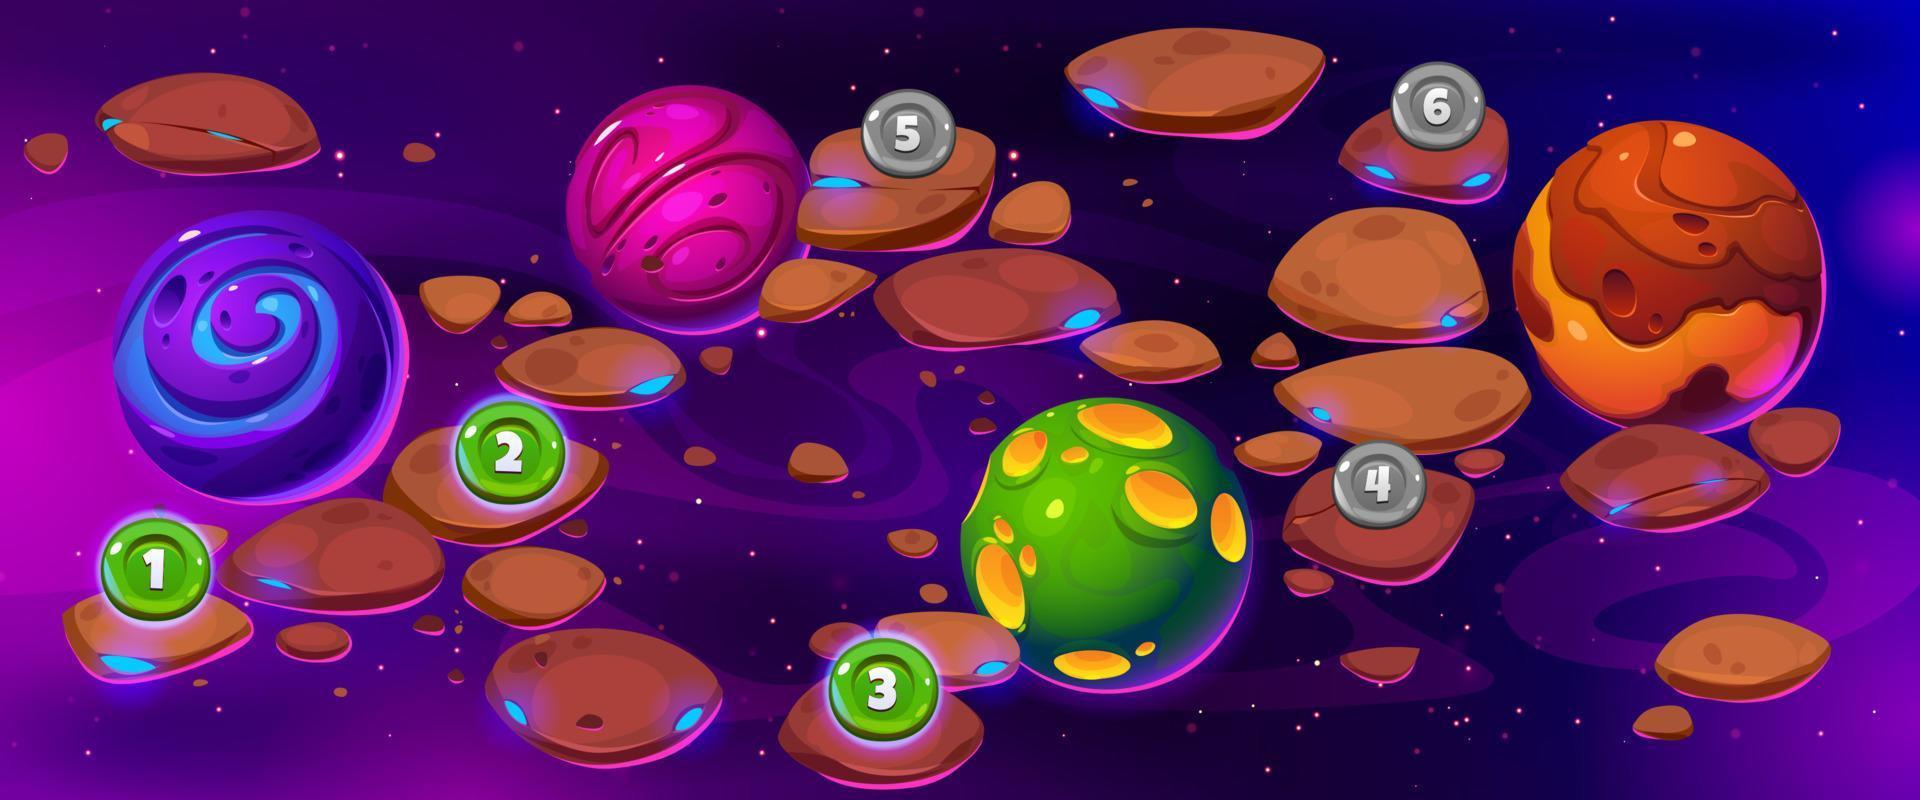 Space game background cartoon ui design vector